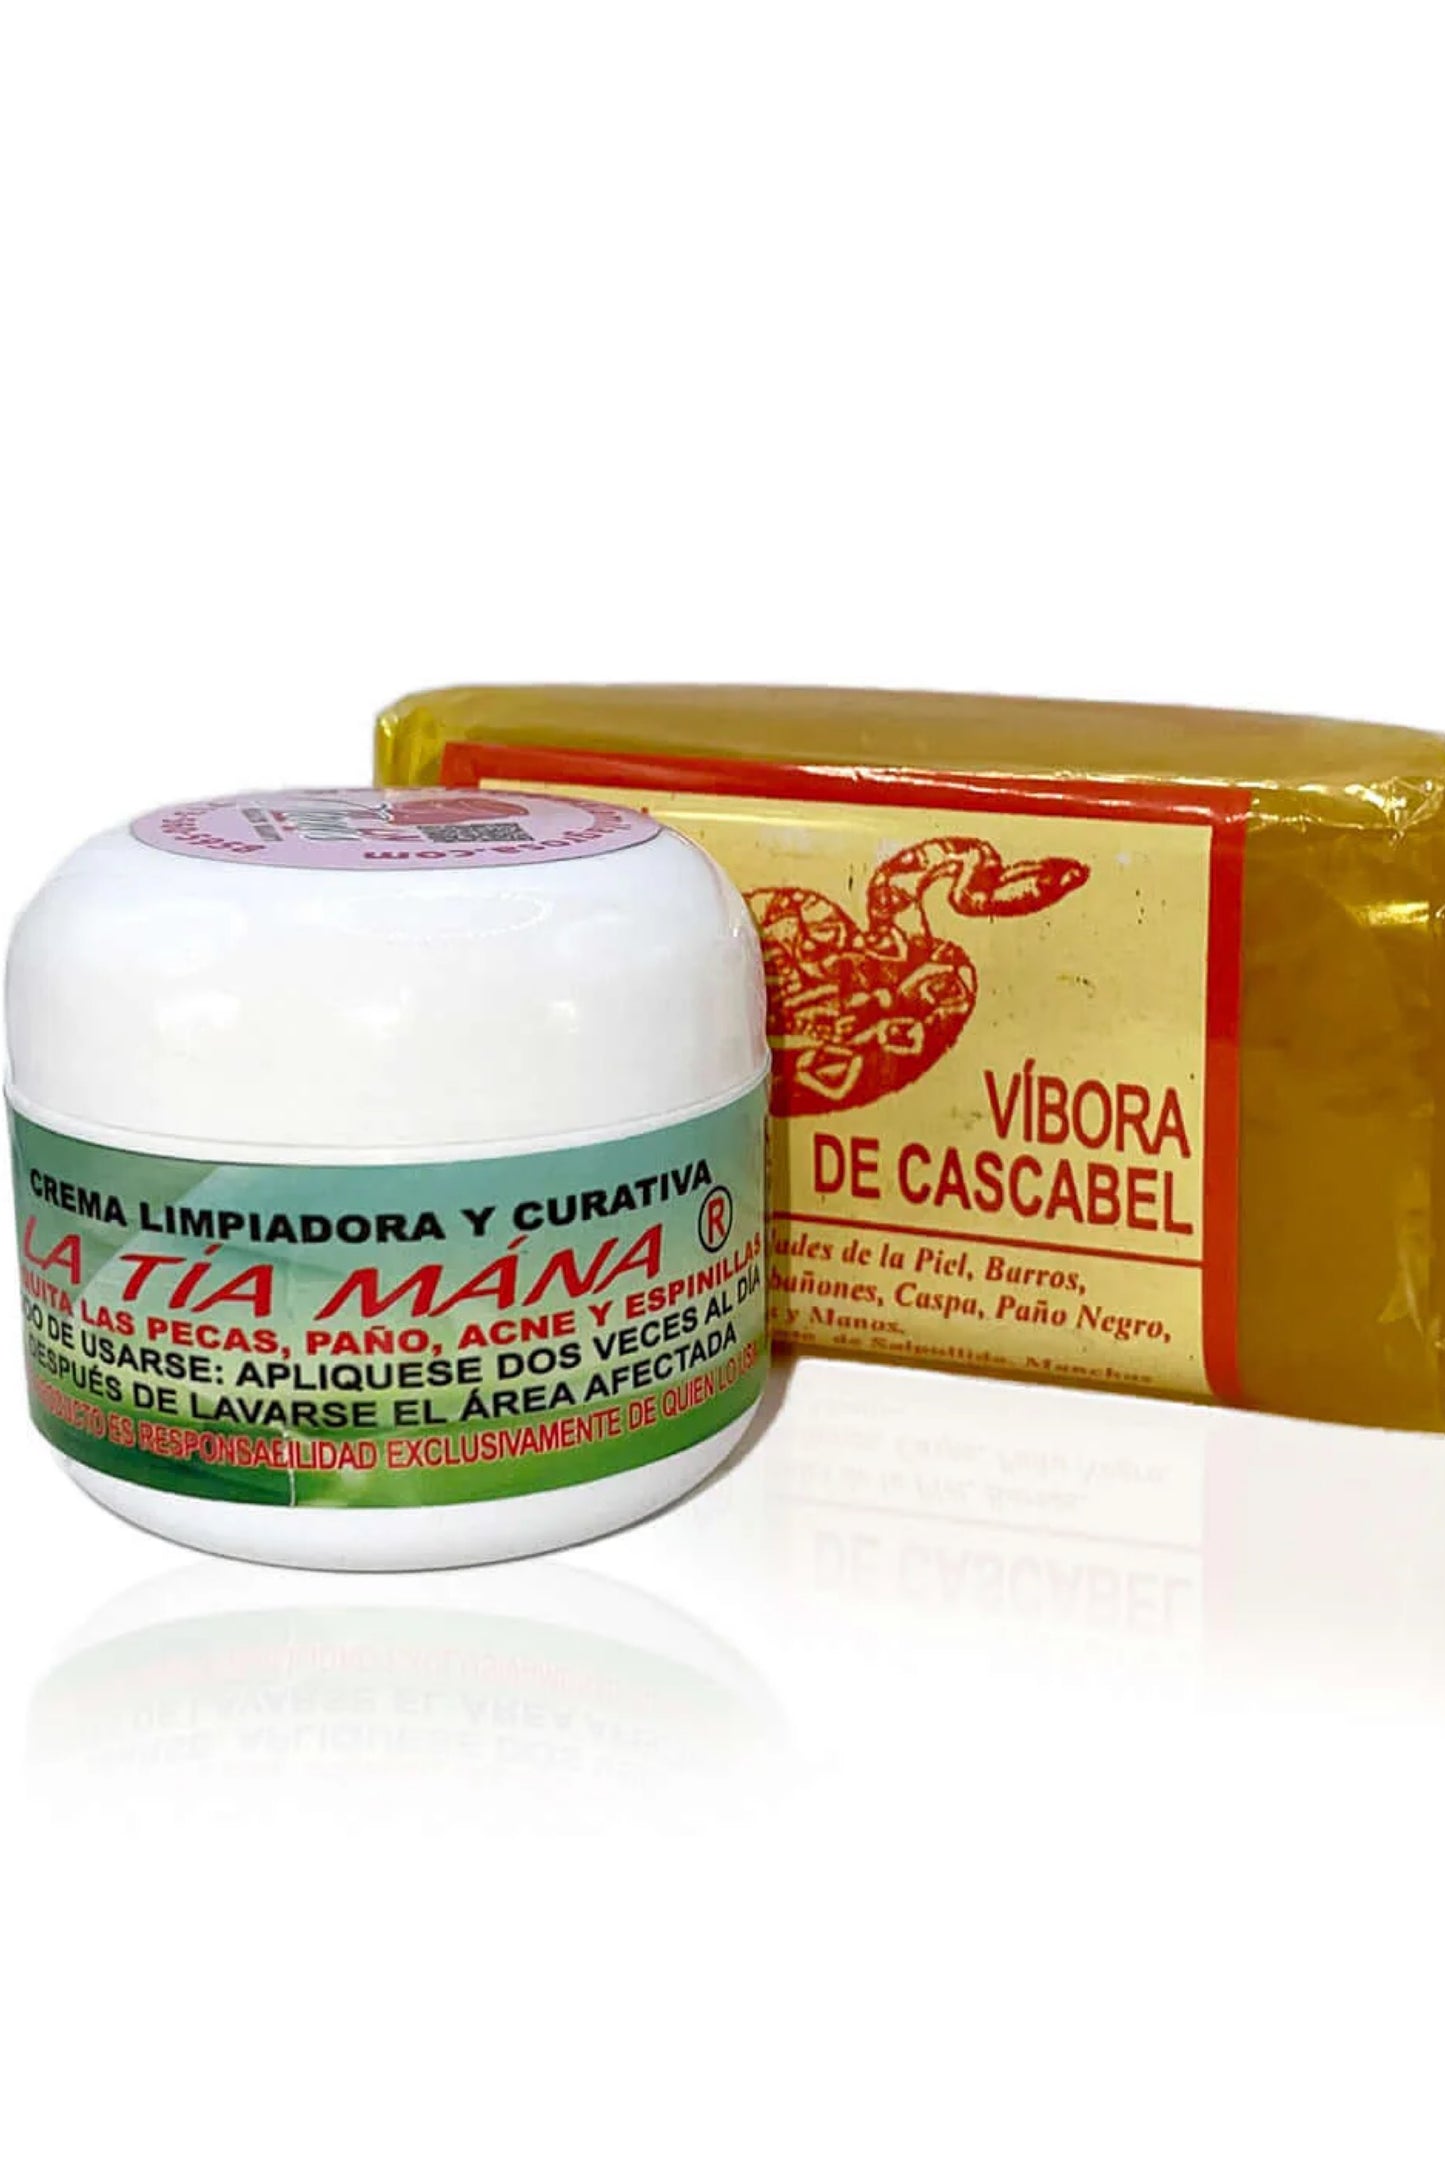 La Tía Mana crema facial + jabón aceite de vibora de cascabel